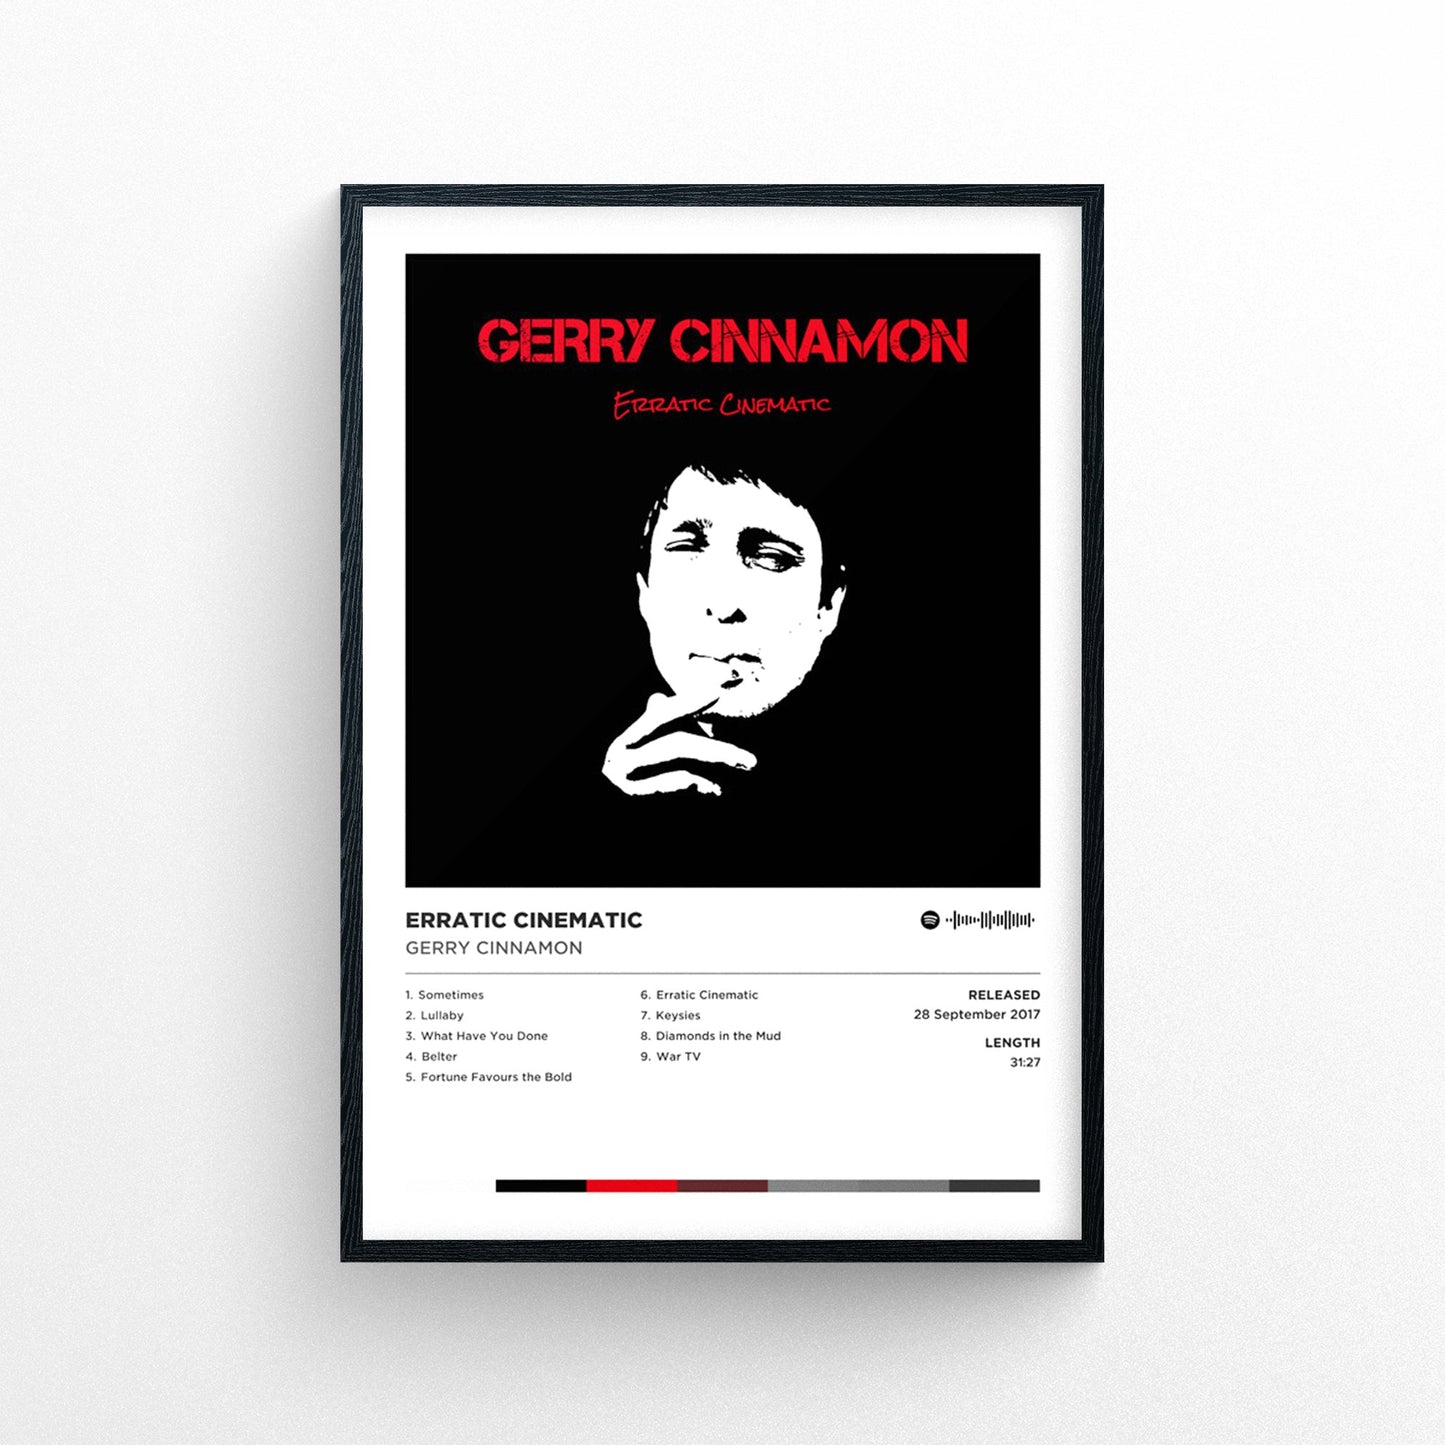 Gerry Cinnamon - Erratic Cinematic Poster Print | Framed Options | Album Cover Artwork